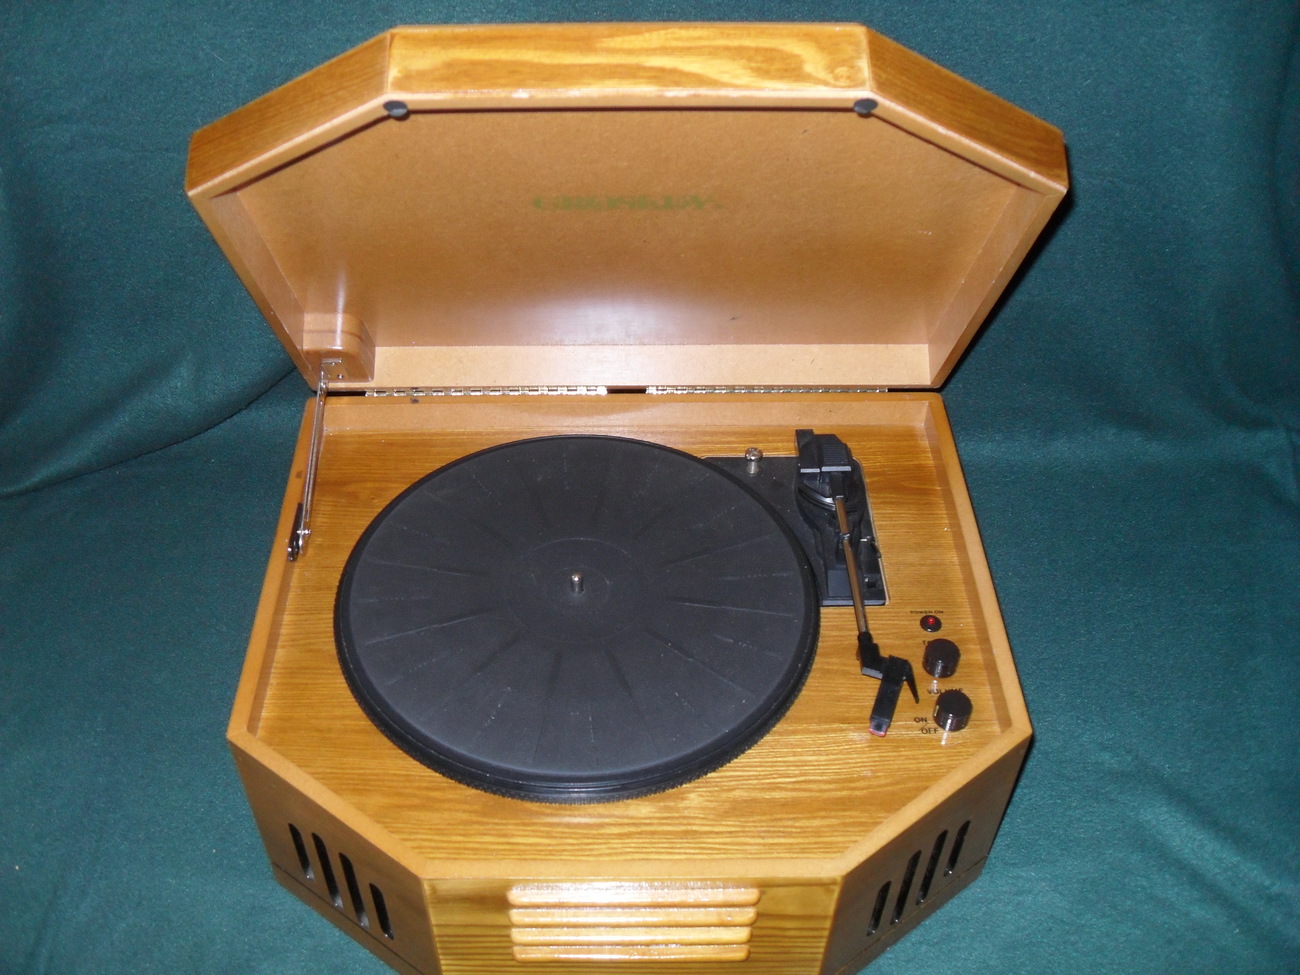 Crosley Model CR-46 Record Player - $49.99